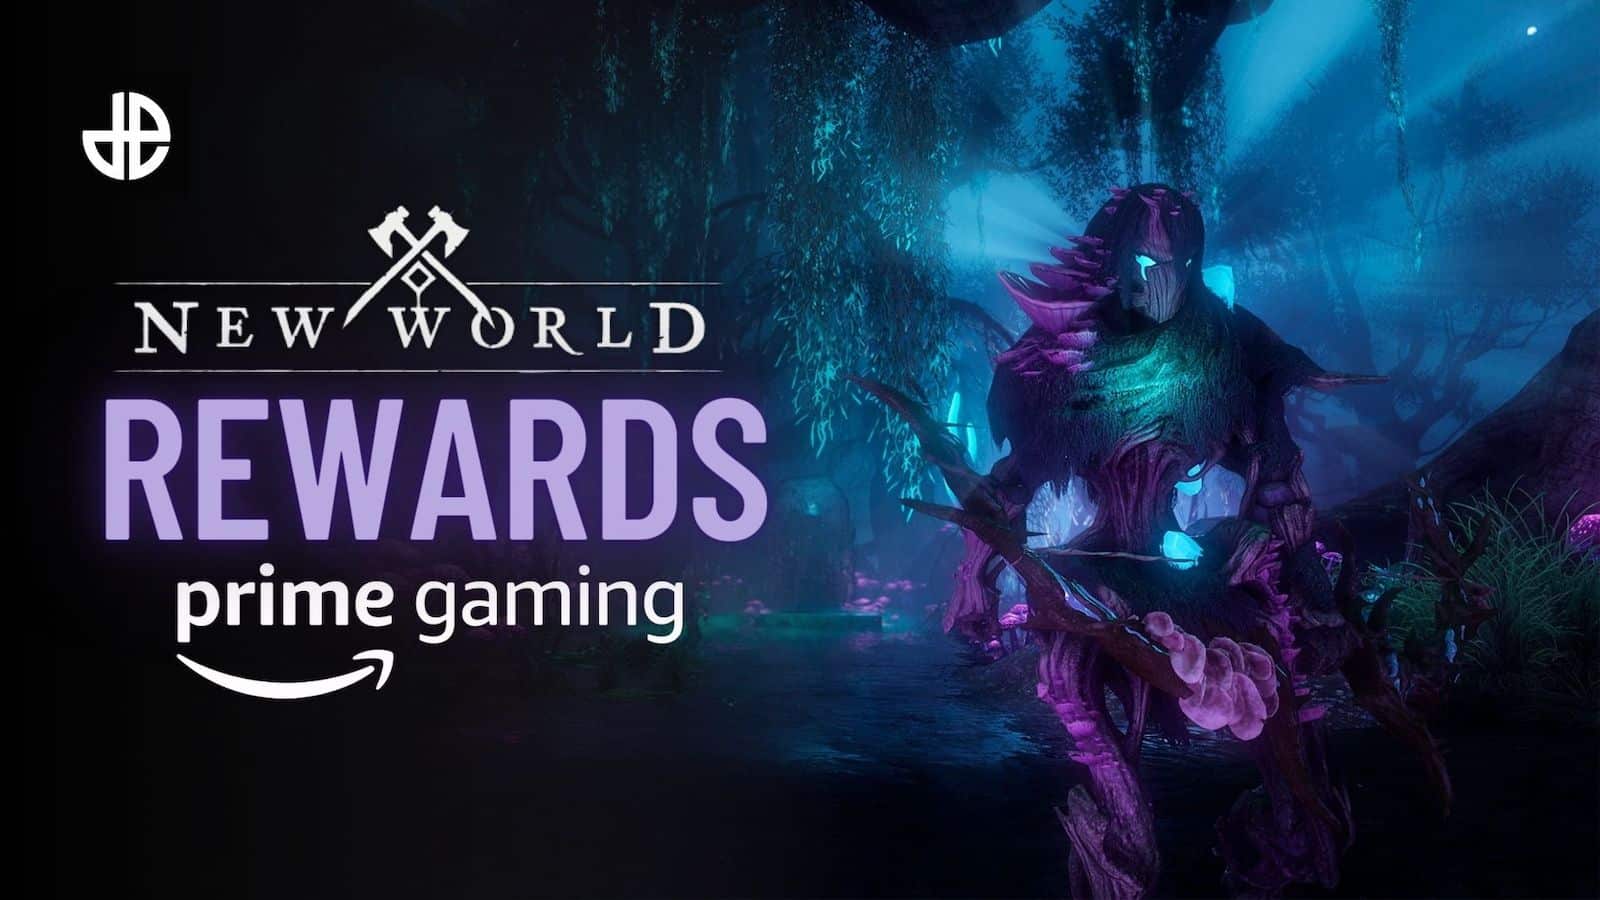 new world prime gaming rewards image